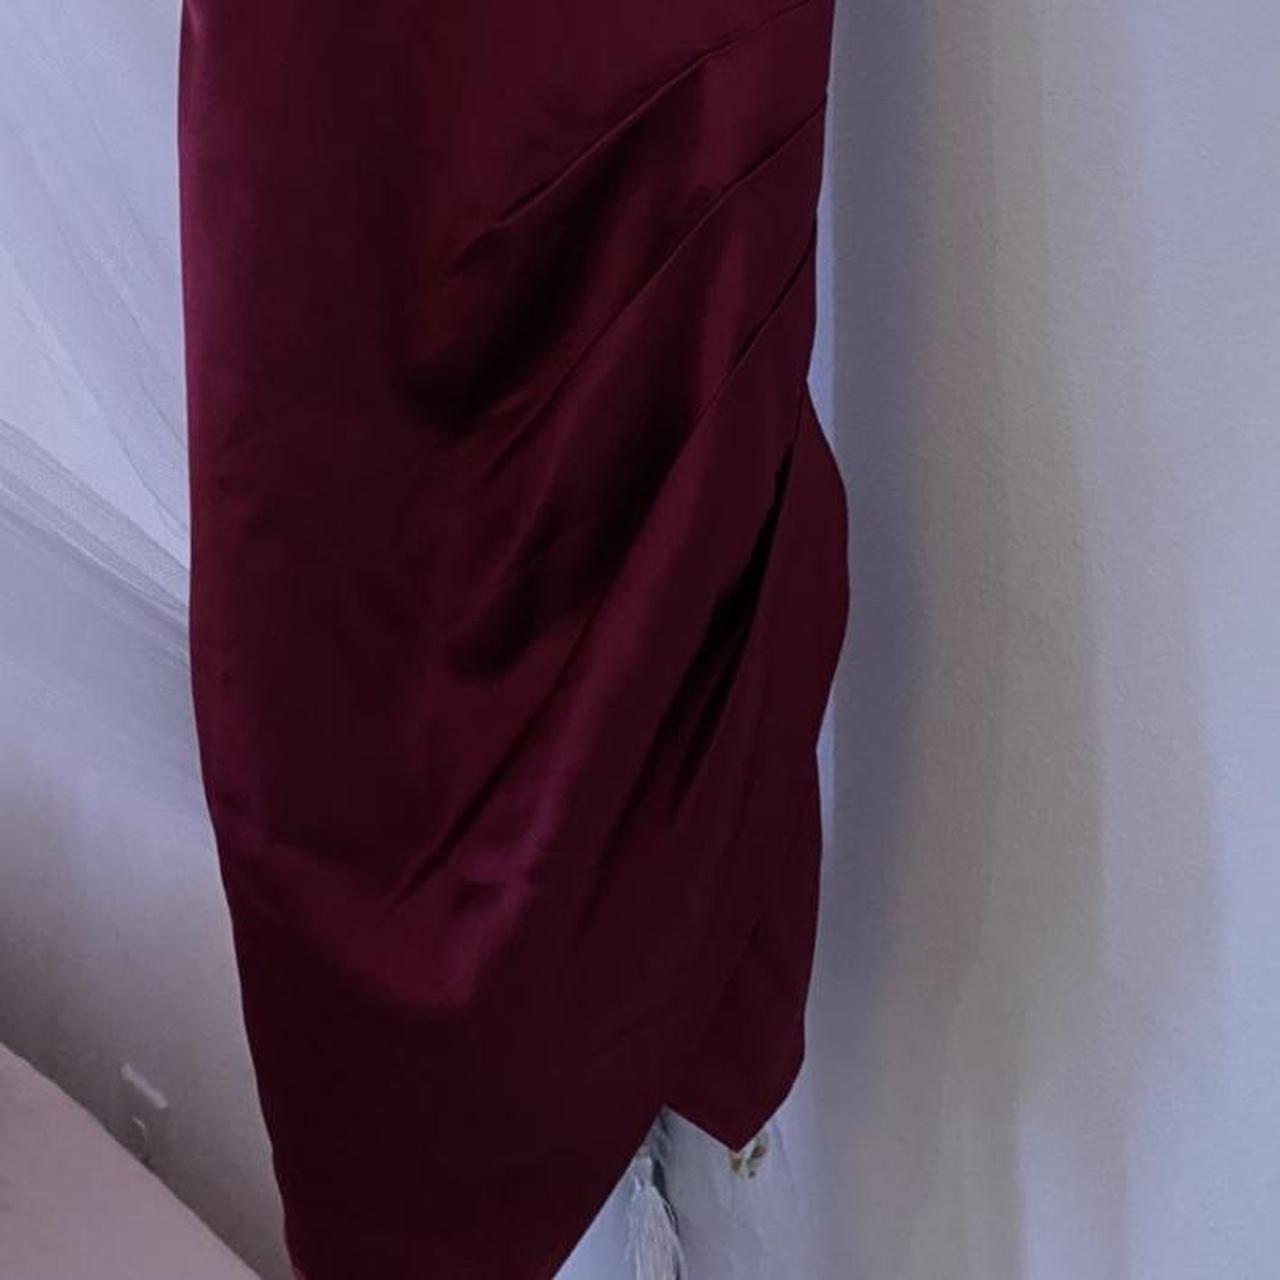 adorable maroon/burgundy satin cowl neck short dress... - Depop